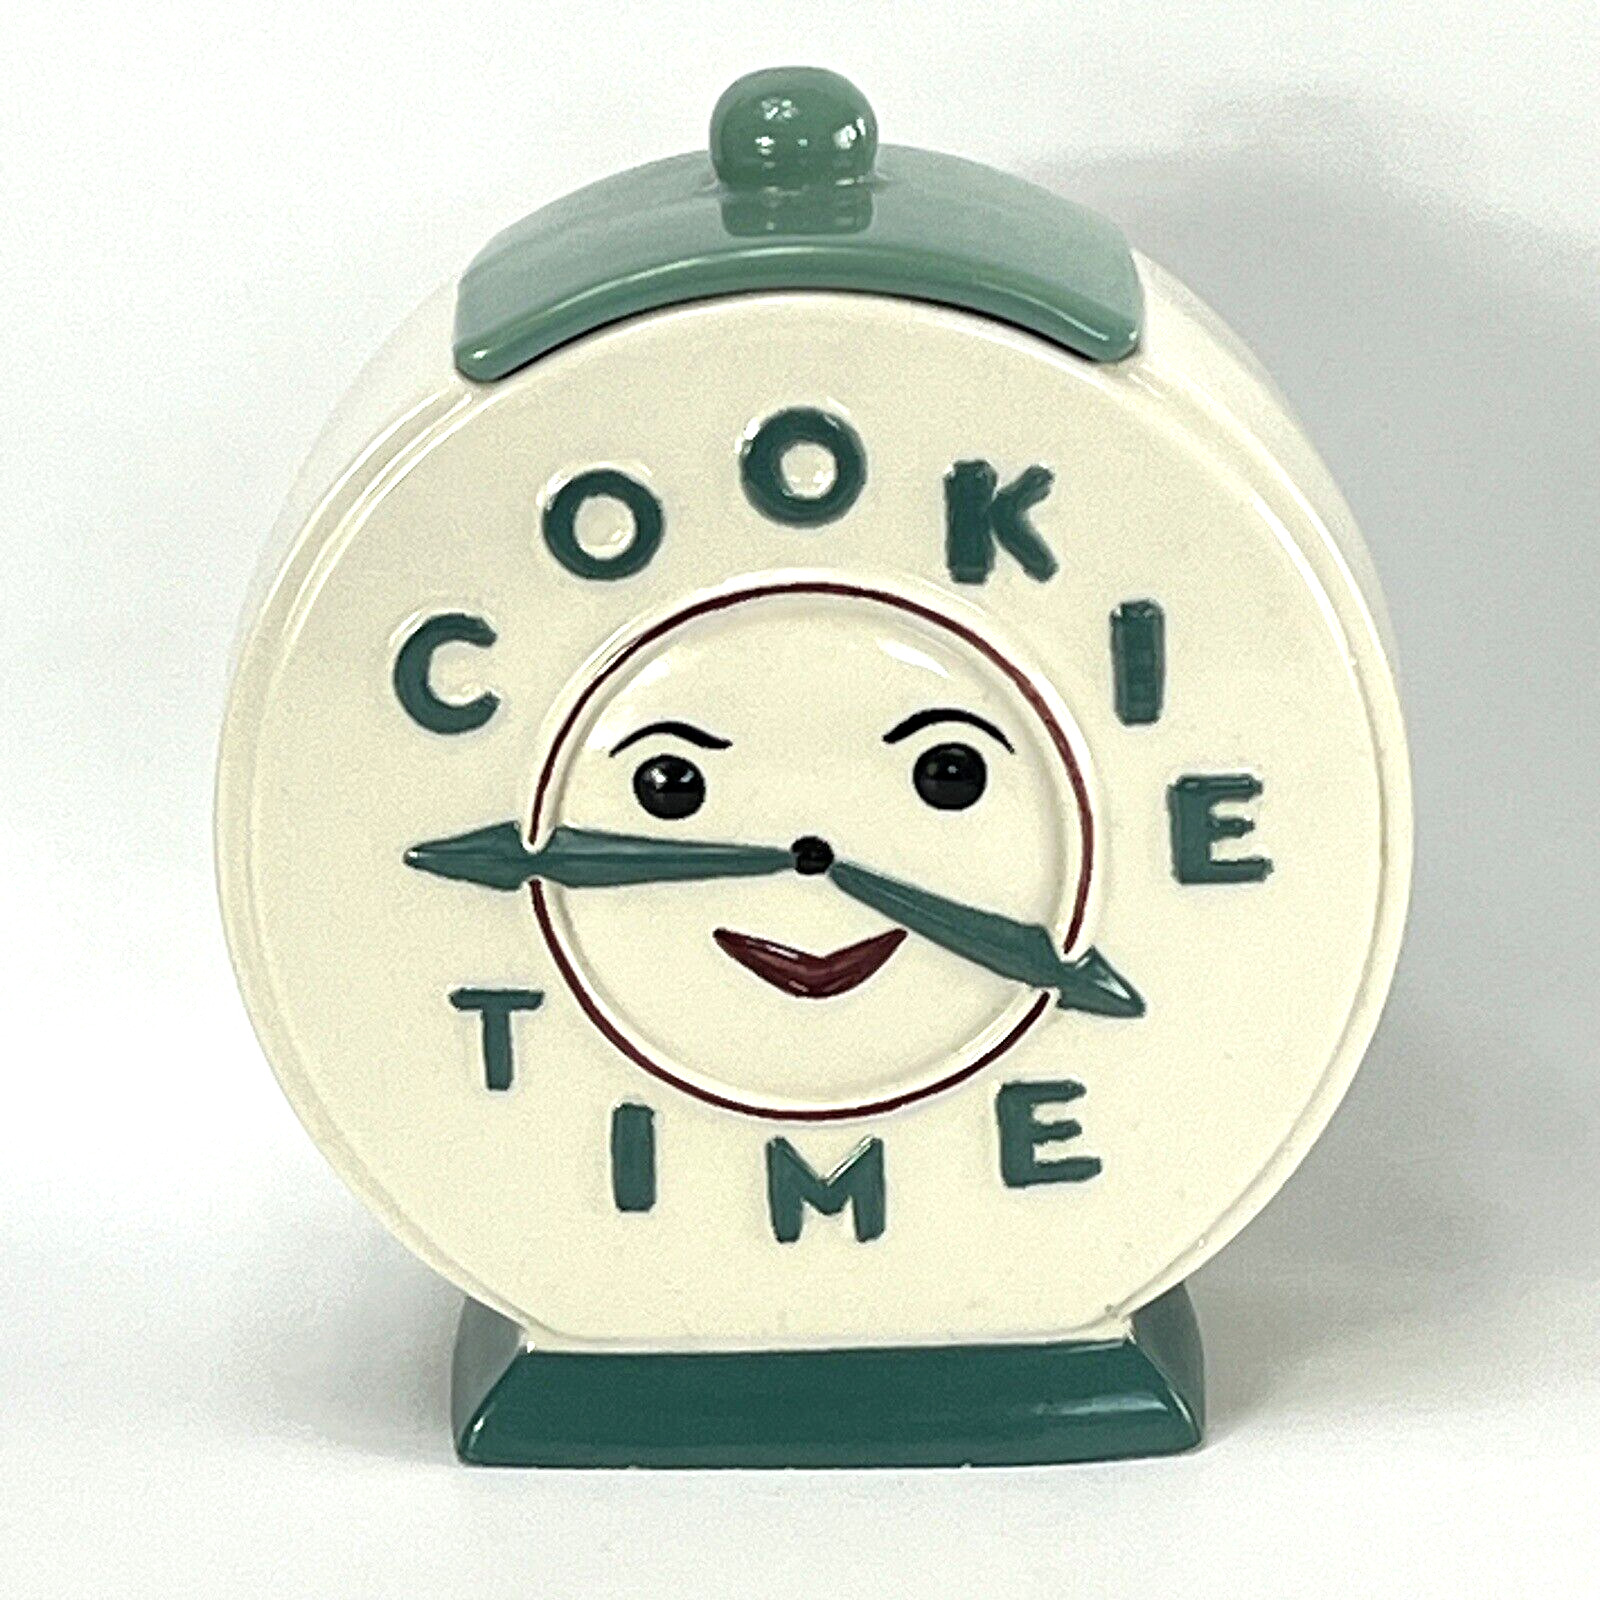 Abingdon USA Cookie Time Cookie Jar 653 Smiling Clock Face Vintage Signed-Teal